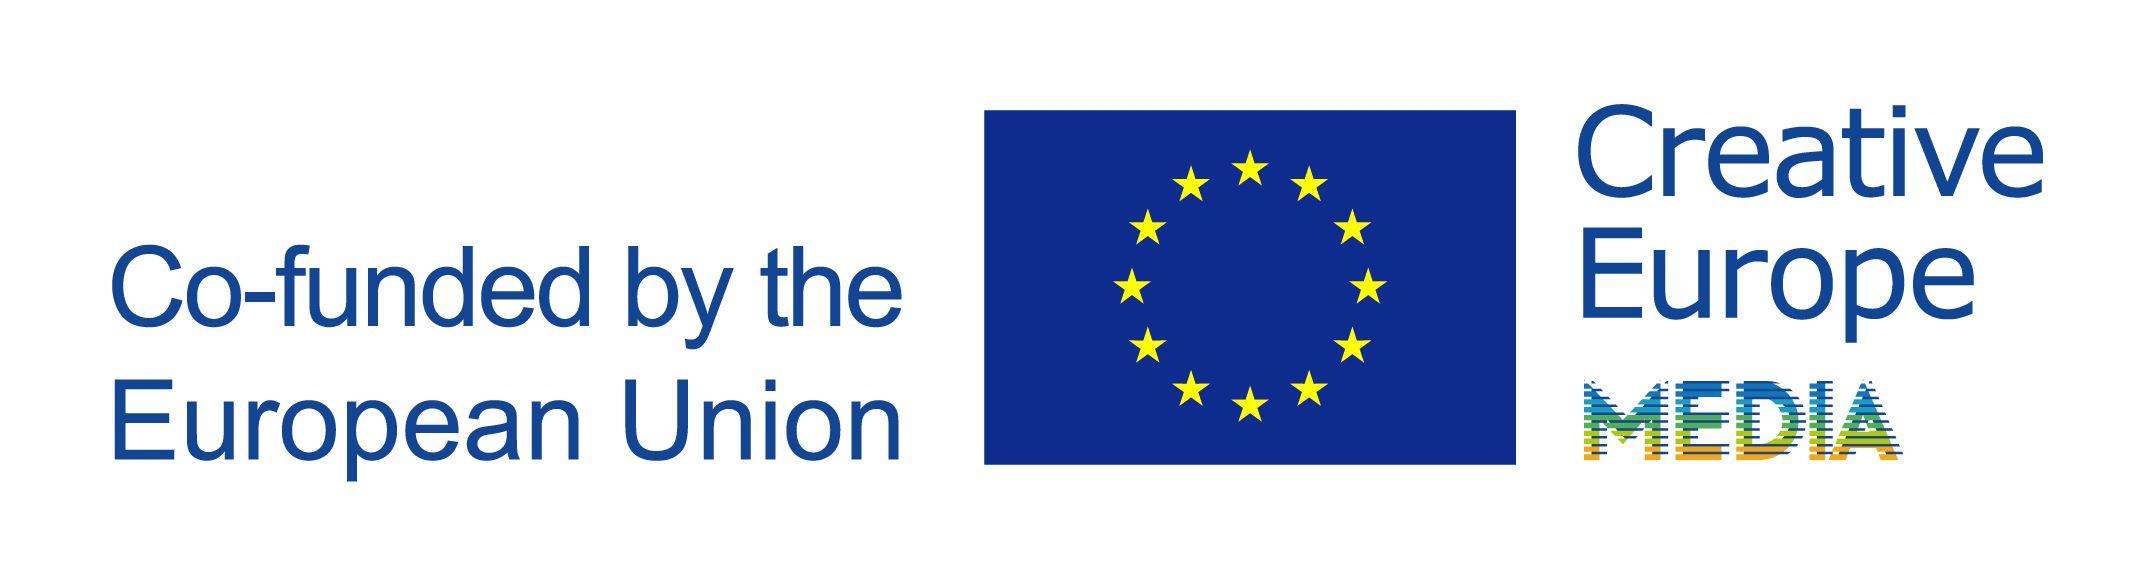 Eu Logo - Creative Europe: Visual identity and logos | EACEA